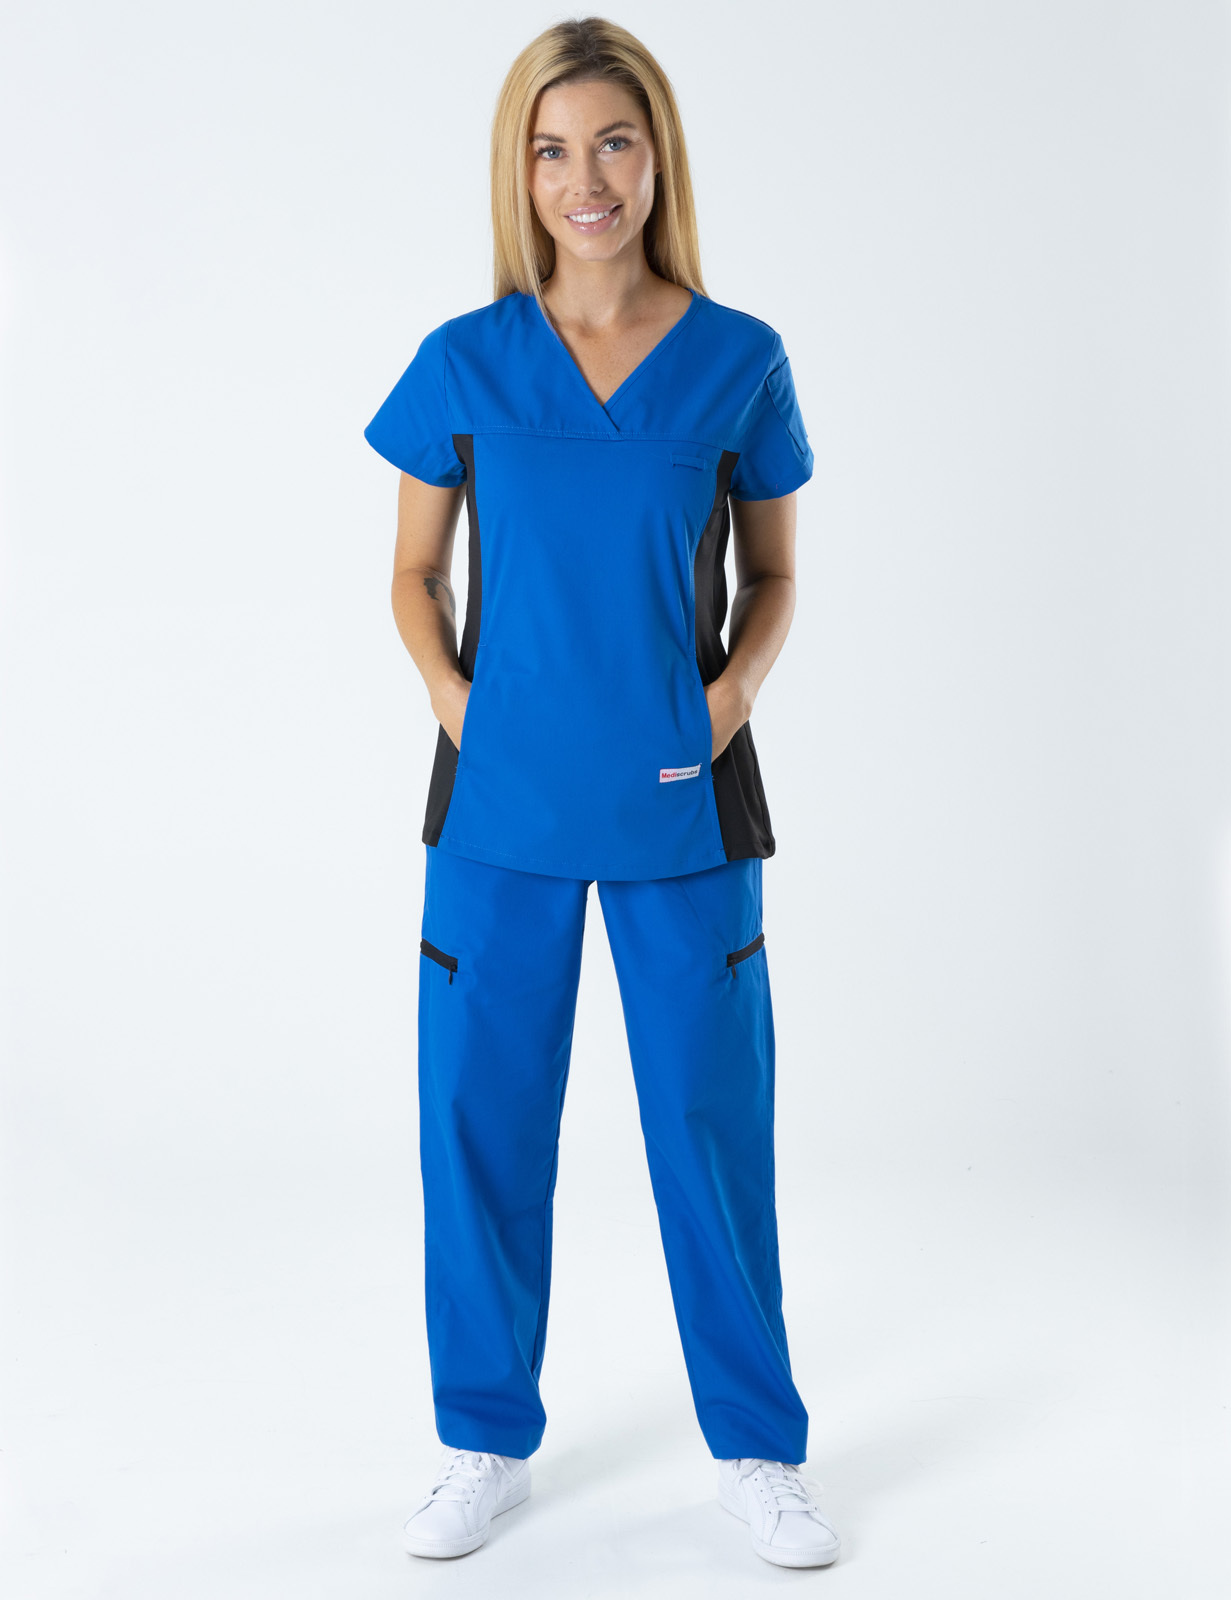 Biloela Hospital Healthcare Department Uniform Set Bundle (Women's Fit Spandex Top and Cargo pants in Royal incl Logos)